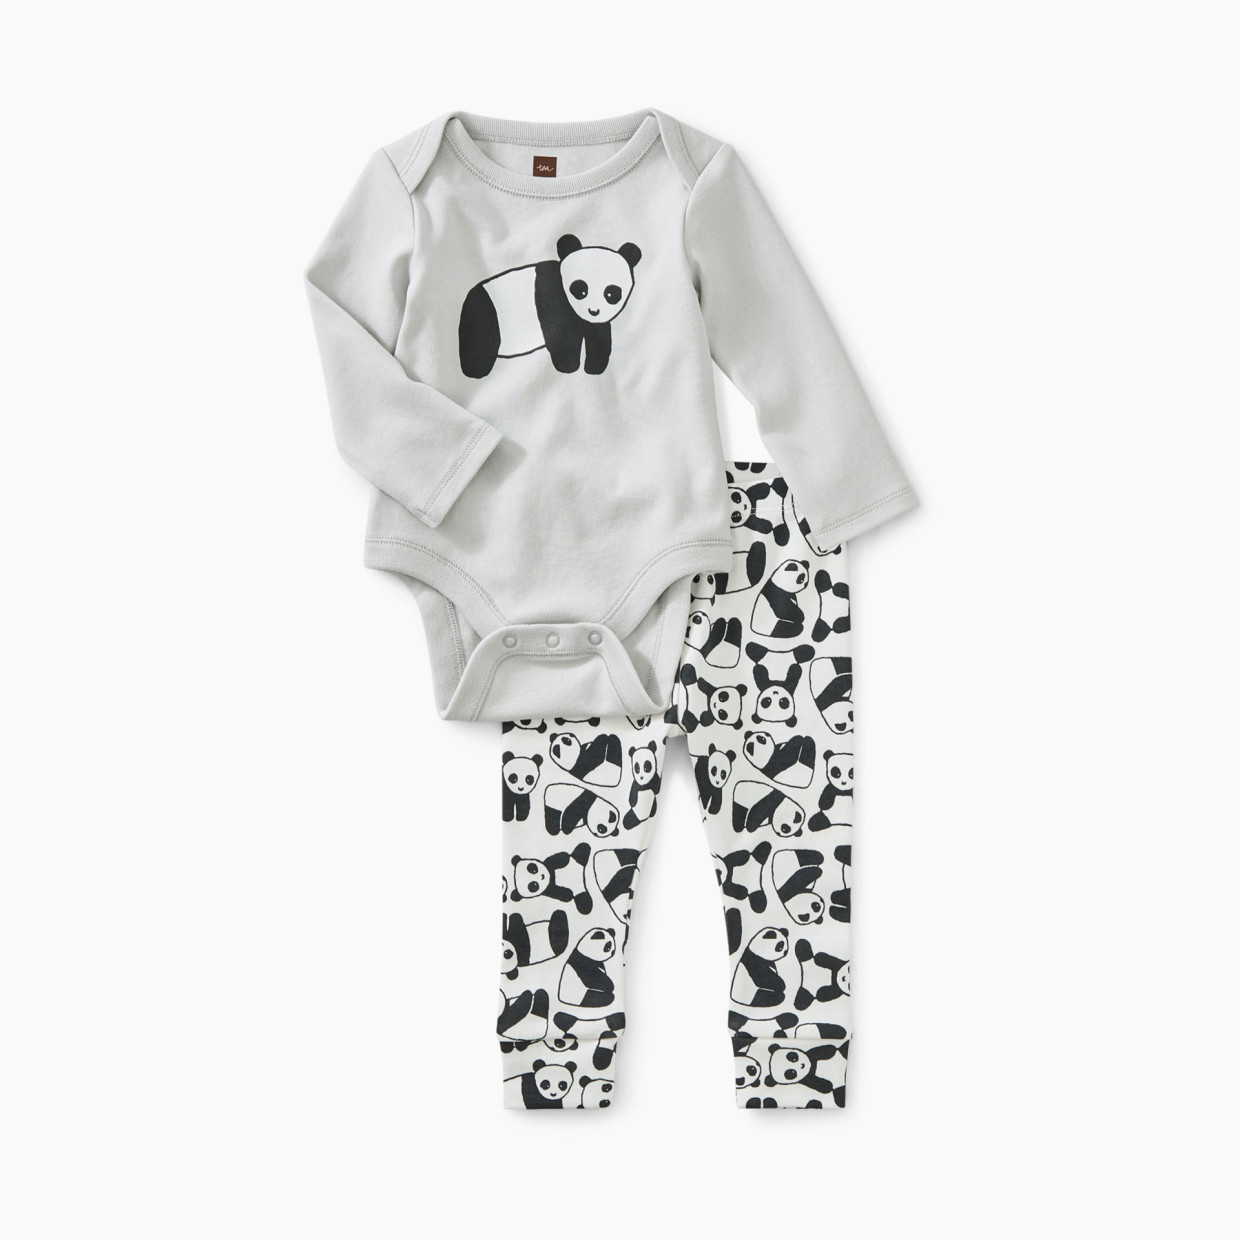 Tea Collection Bodysuit Baby Outfit - Lunar Rock/Panda, 0-3 Months.